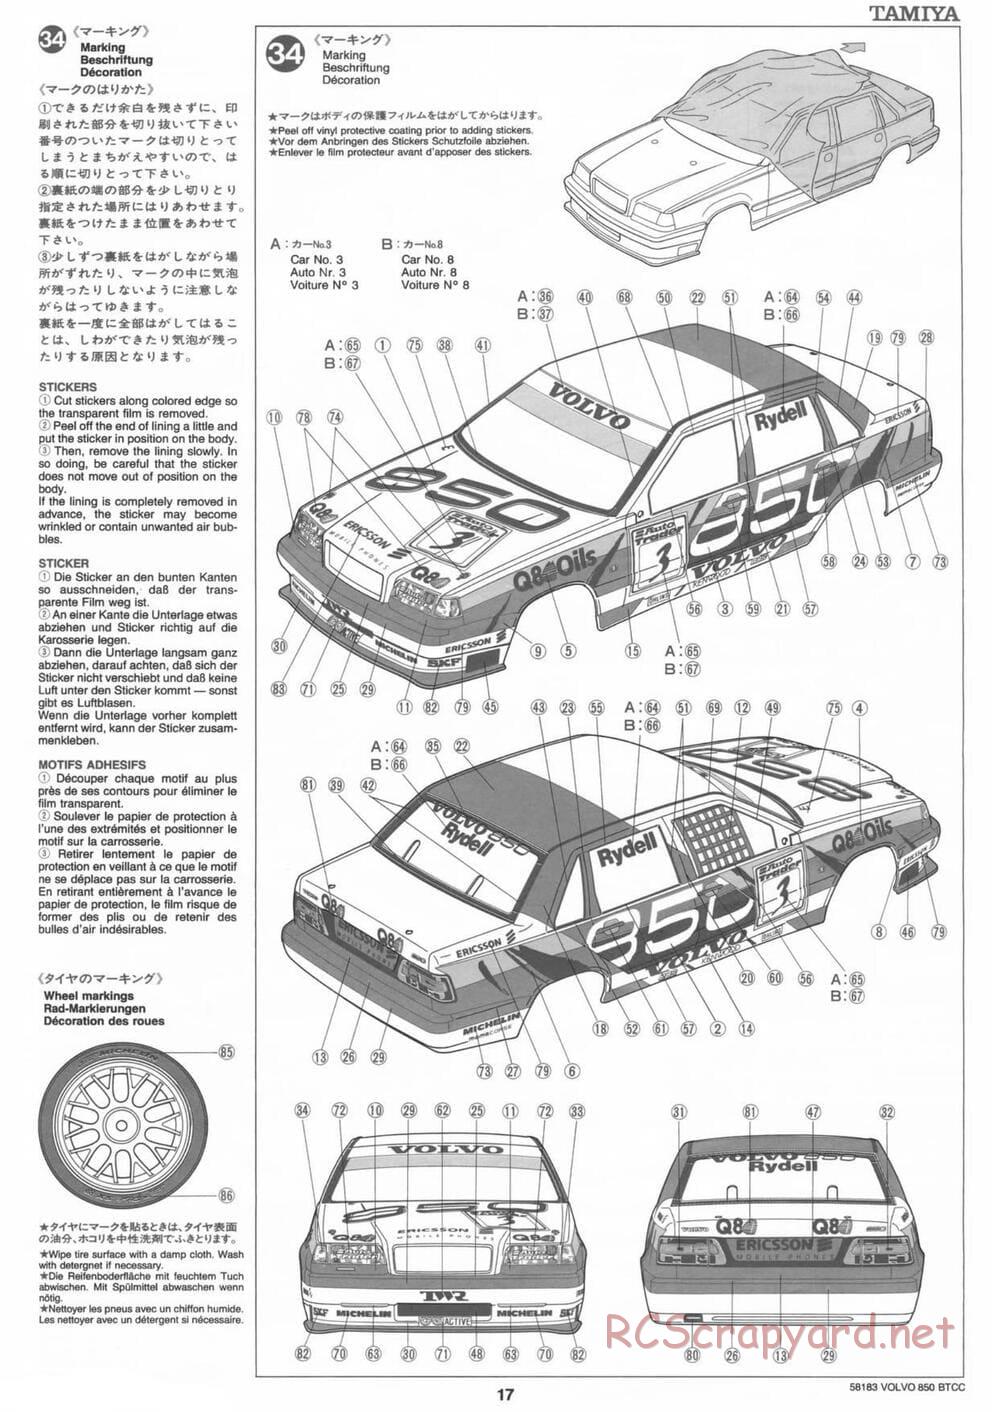 Tamiya - Volvo 850 BTCC - FF-01 Chassis - Manual - Page 17